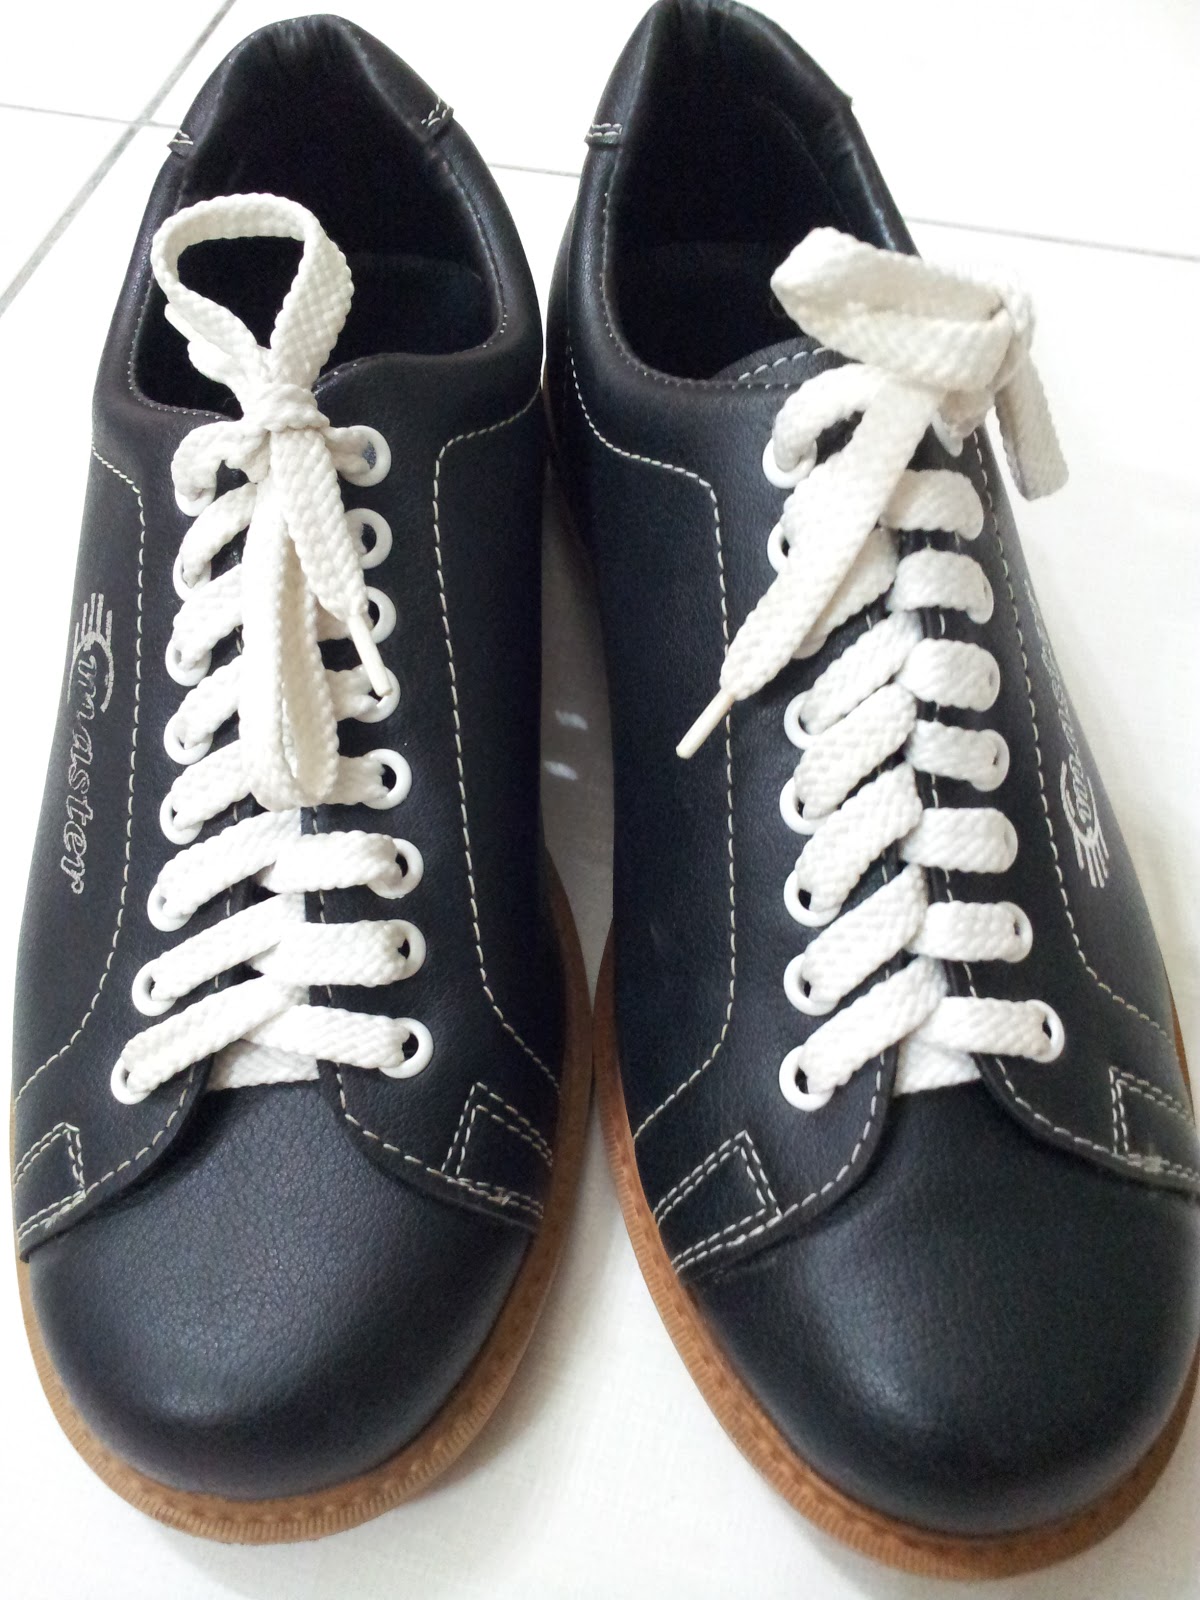 KEDAI BOWLING ONLINE: Bowling Shoes Brand MASTER size 6